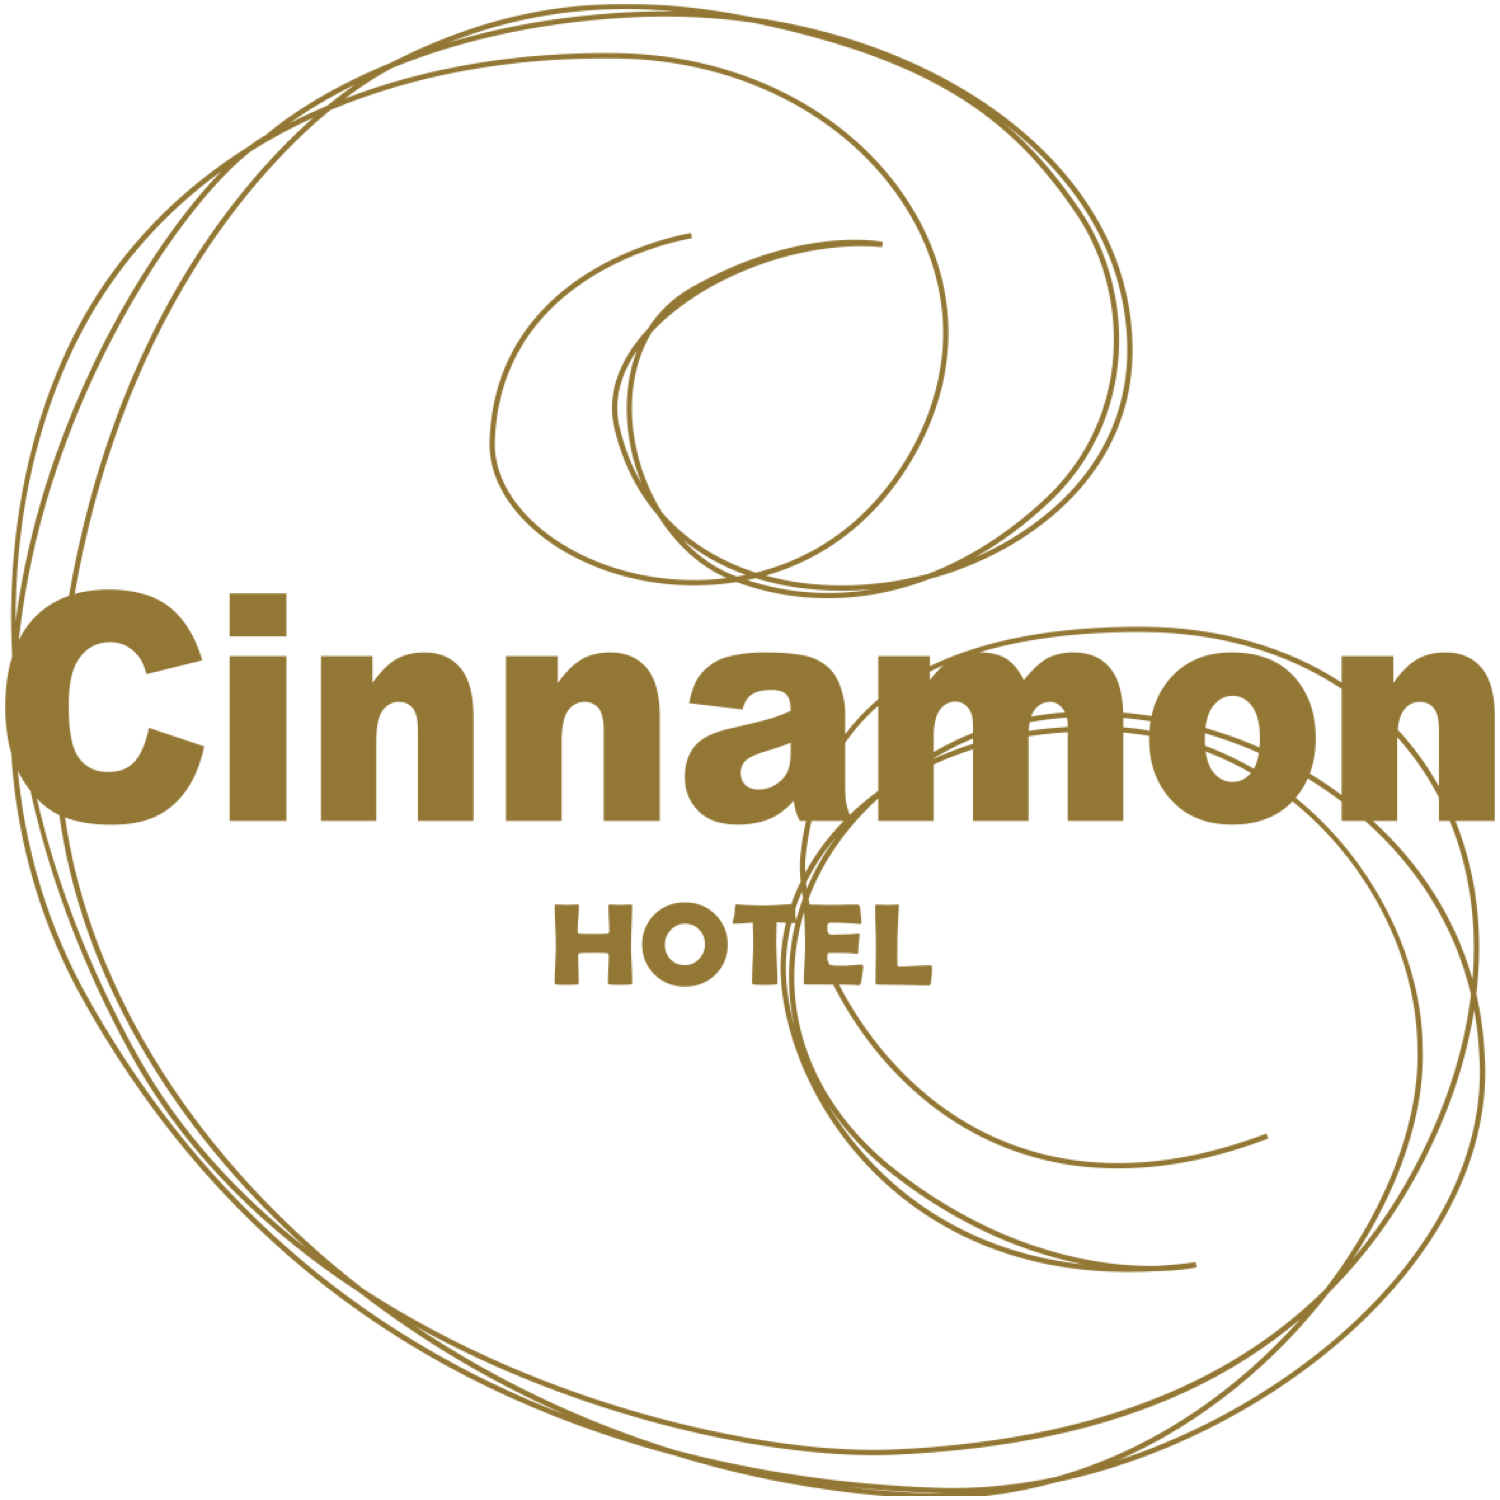 Cinnamon Cathedral Hotel - Hanoi, Vietnam